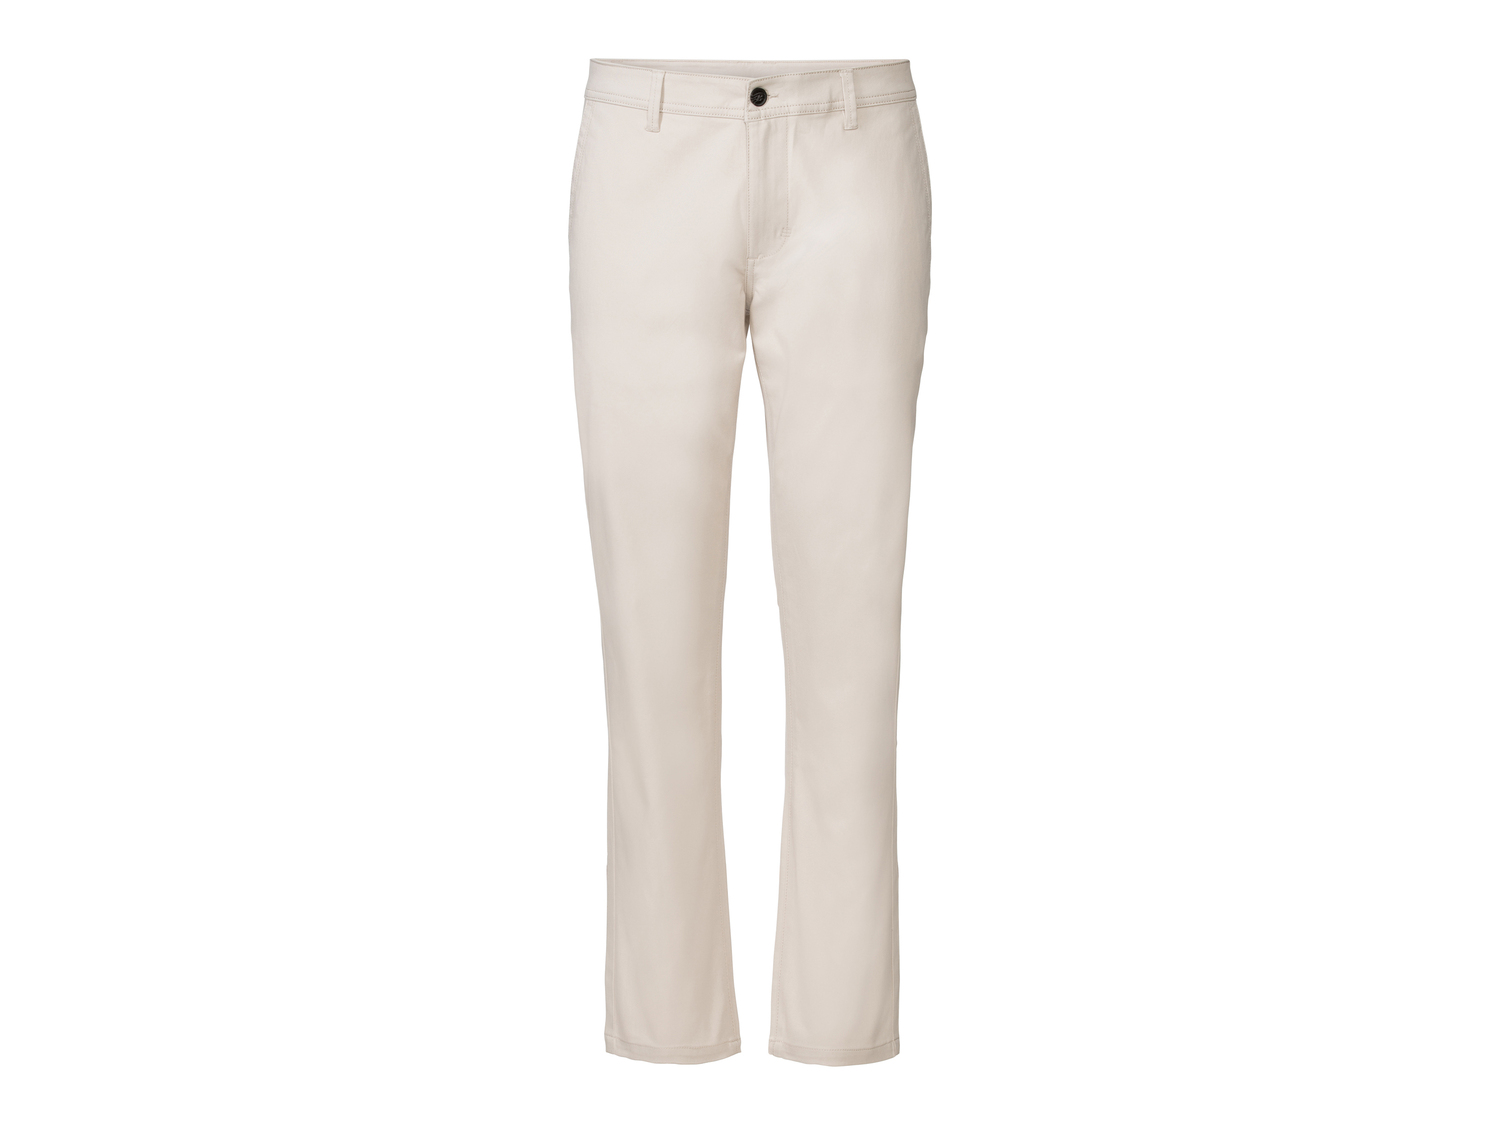 Pantaloni Chino Straight Fit da uomo Livergy, prezzo 9.99 &#8364; 
Misure: 48-56
Taglie ...